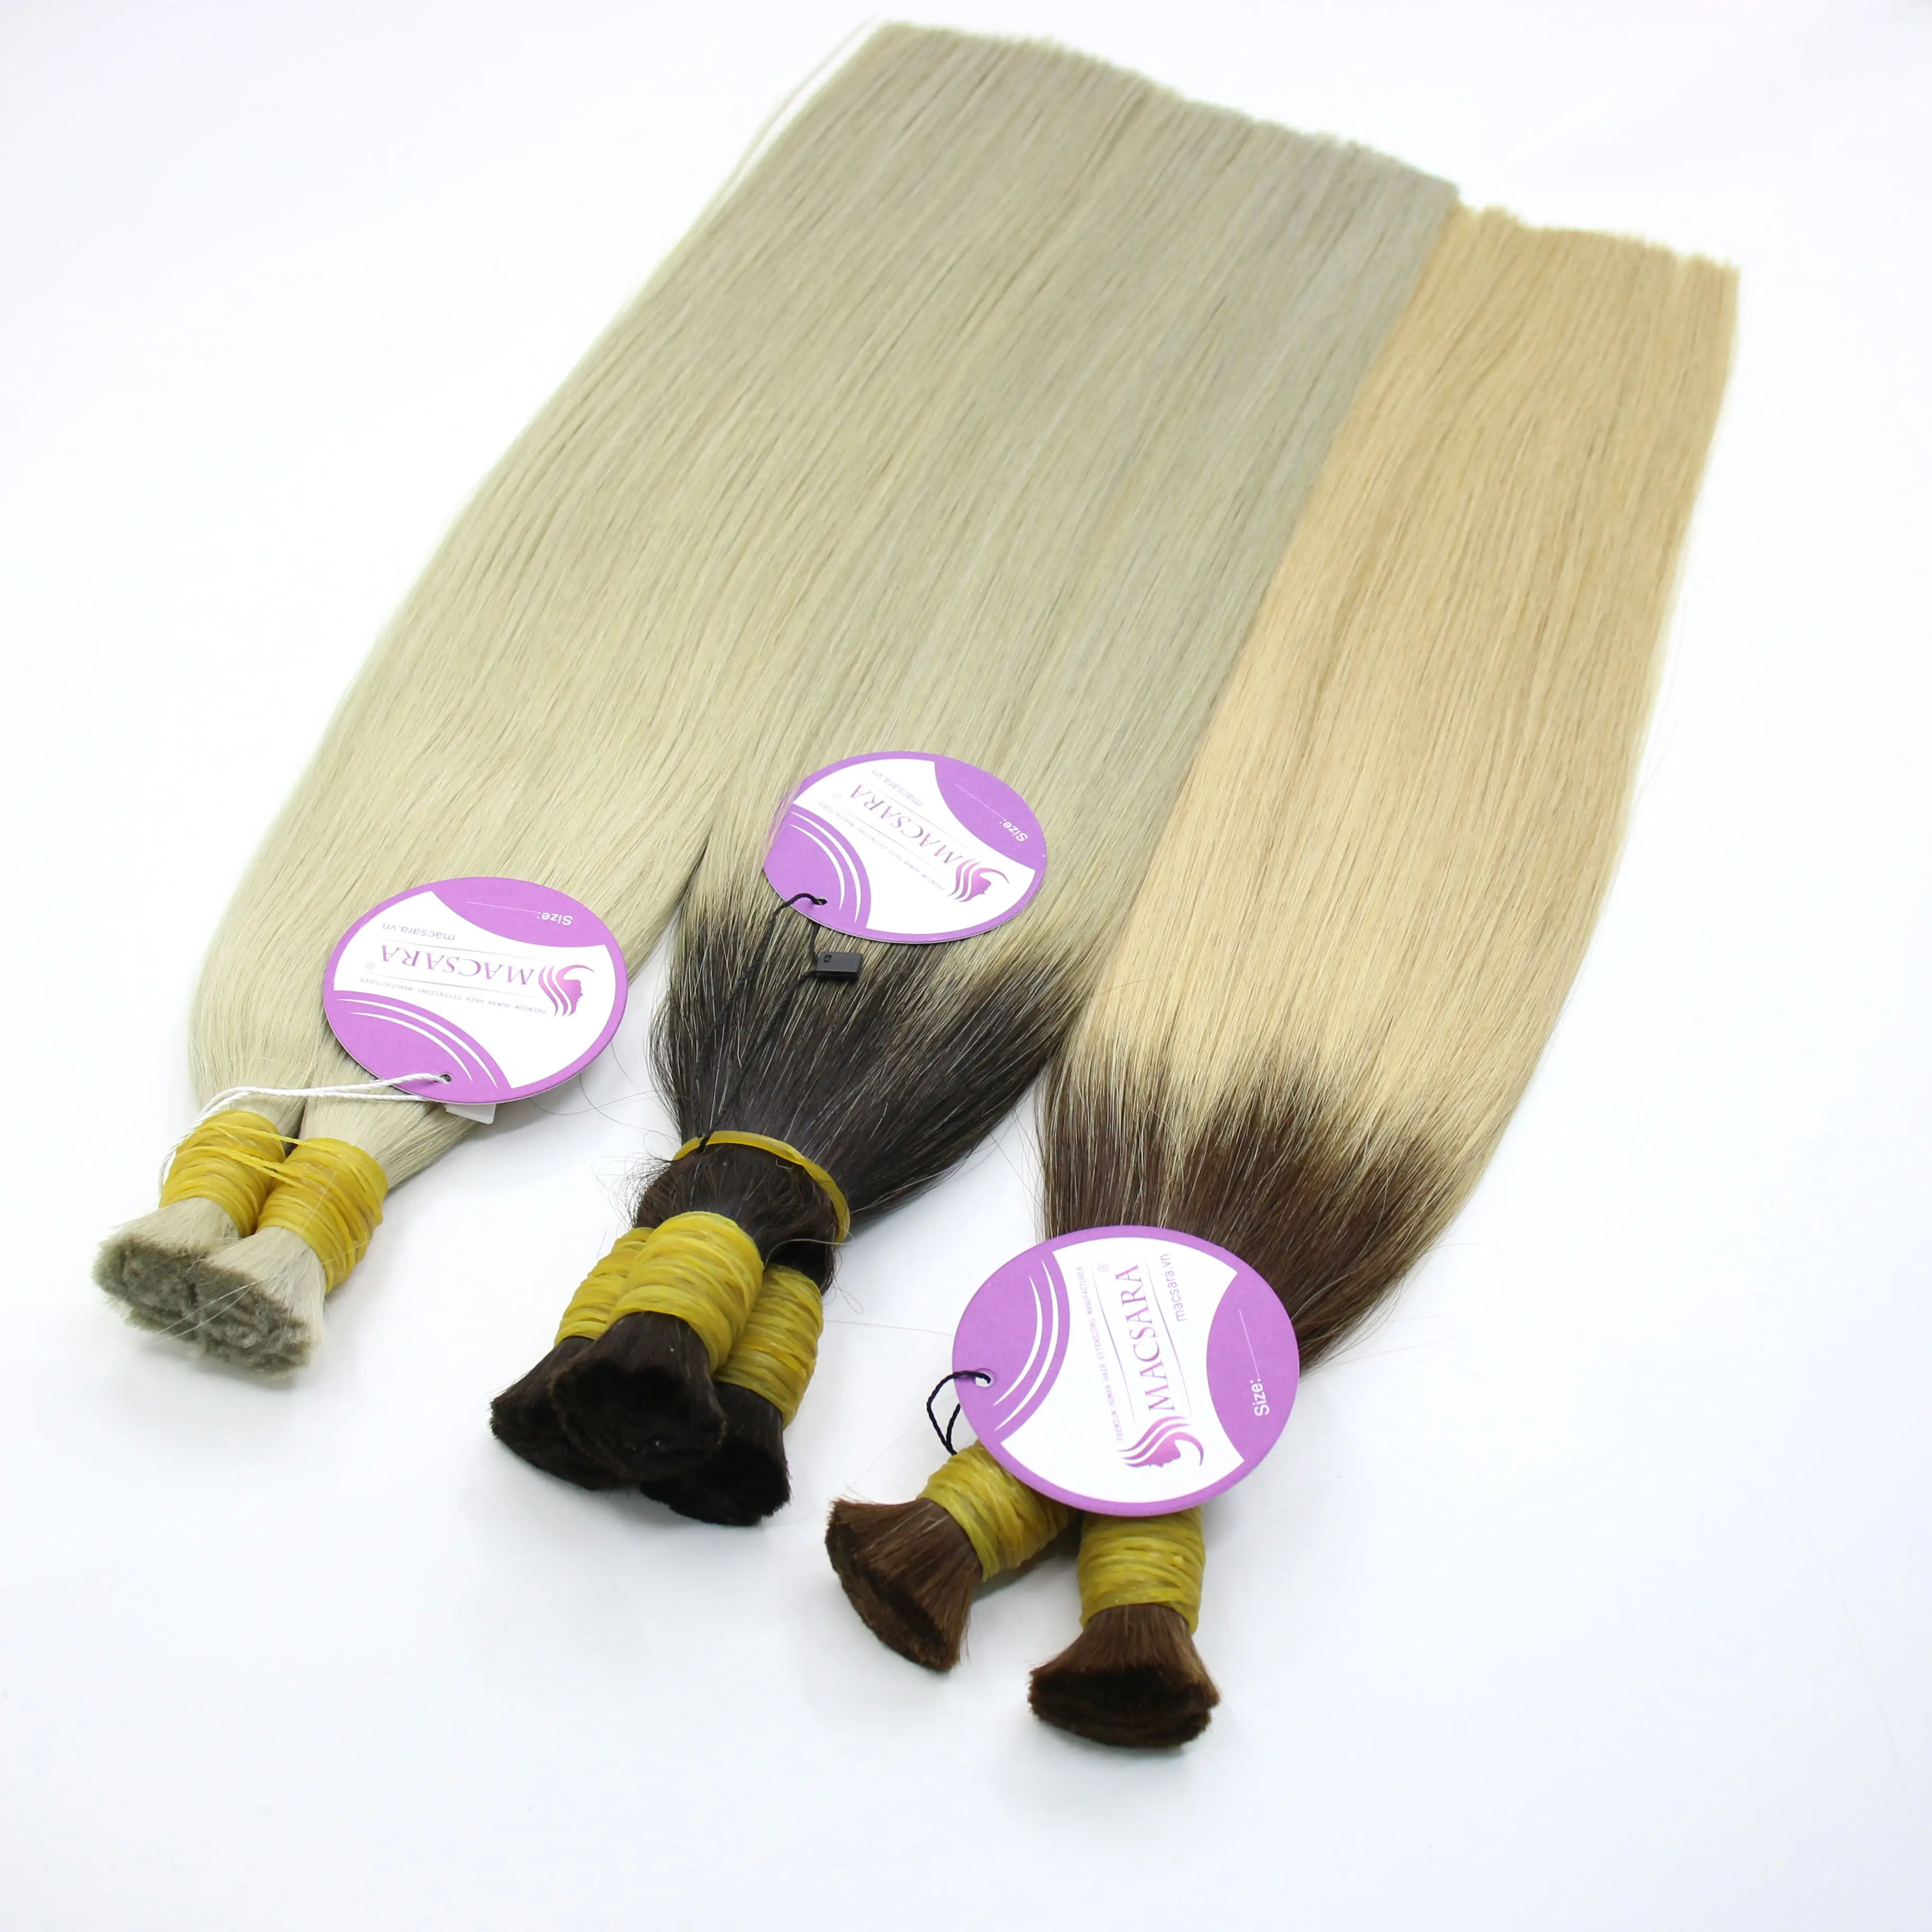 100 real raw human virgin hair unprocessed price hair bundles for black woman TOP raw cuticle aligned hair ODM OEM